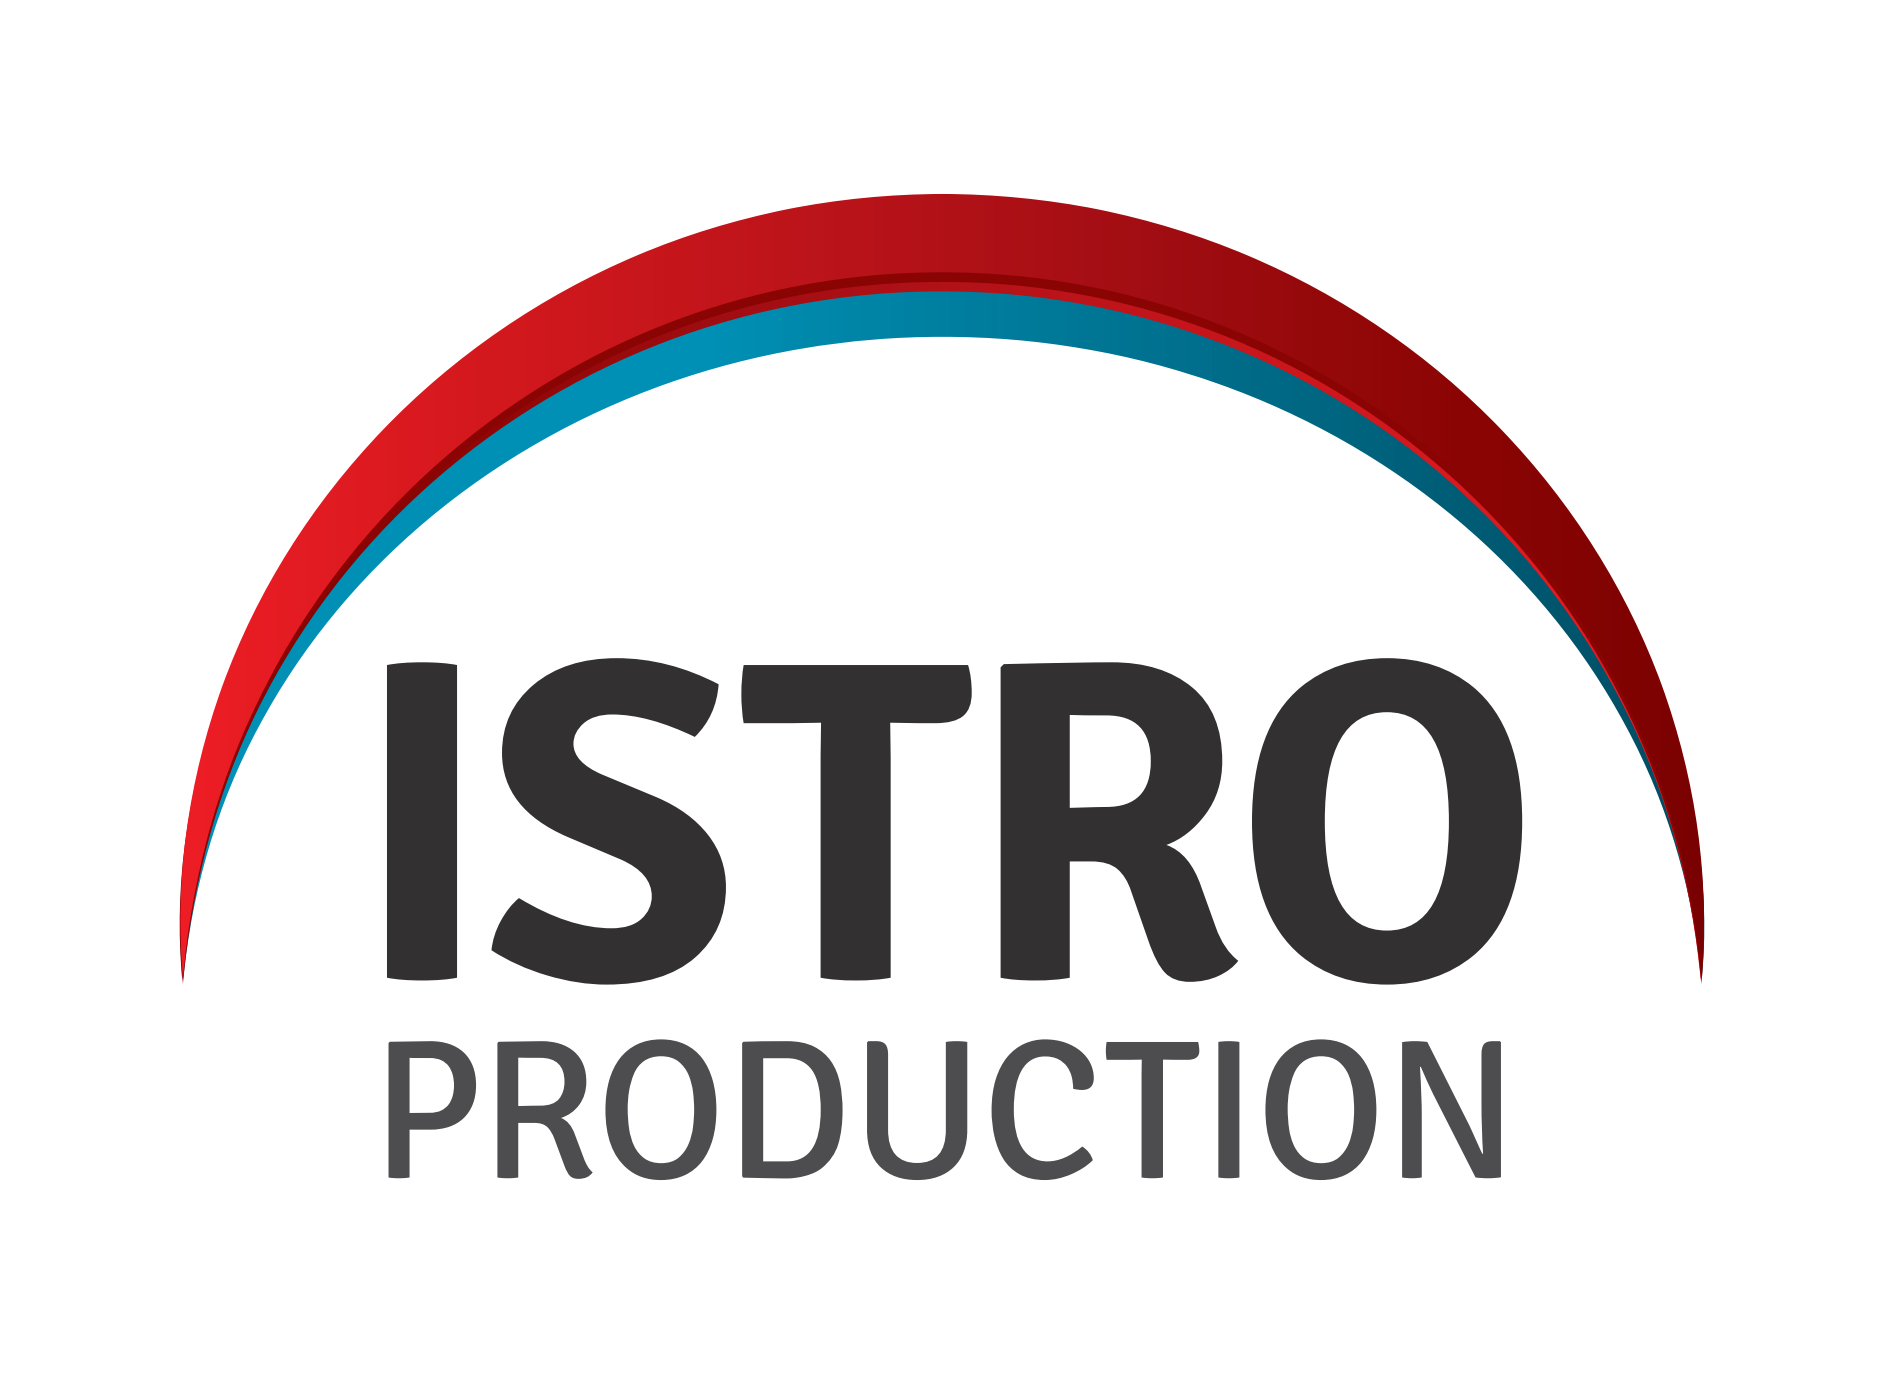 istro production logo